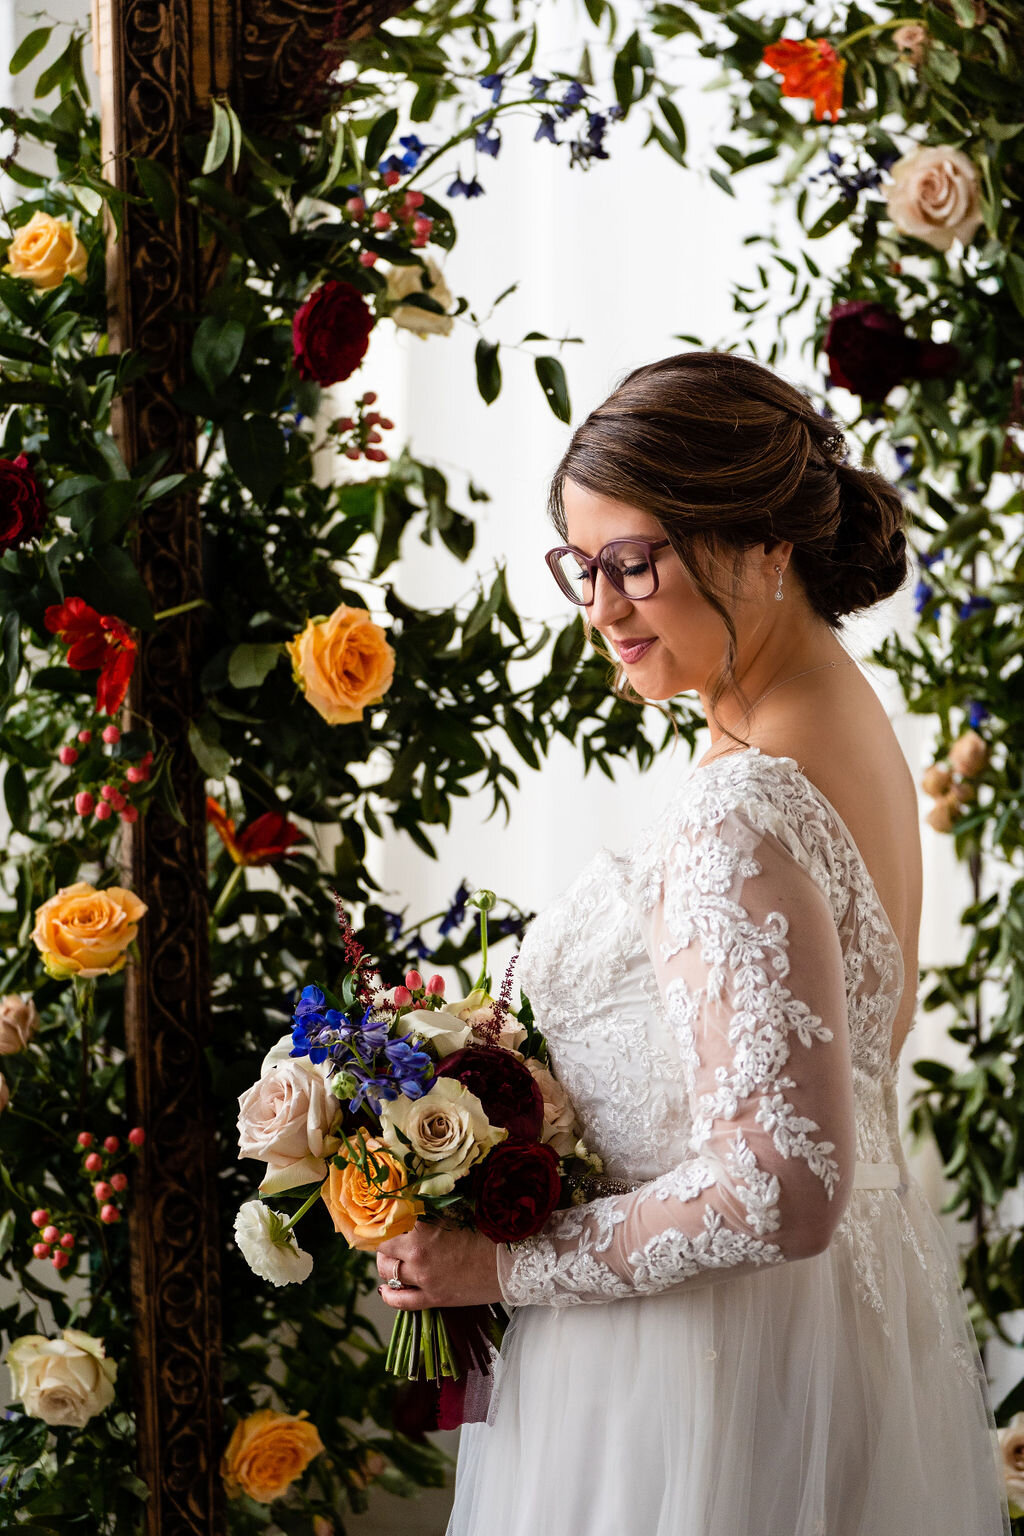 memphis-wedding-florist-venue-propocellar-blue-red-fall-november-table-flowers